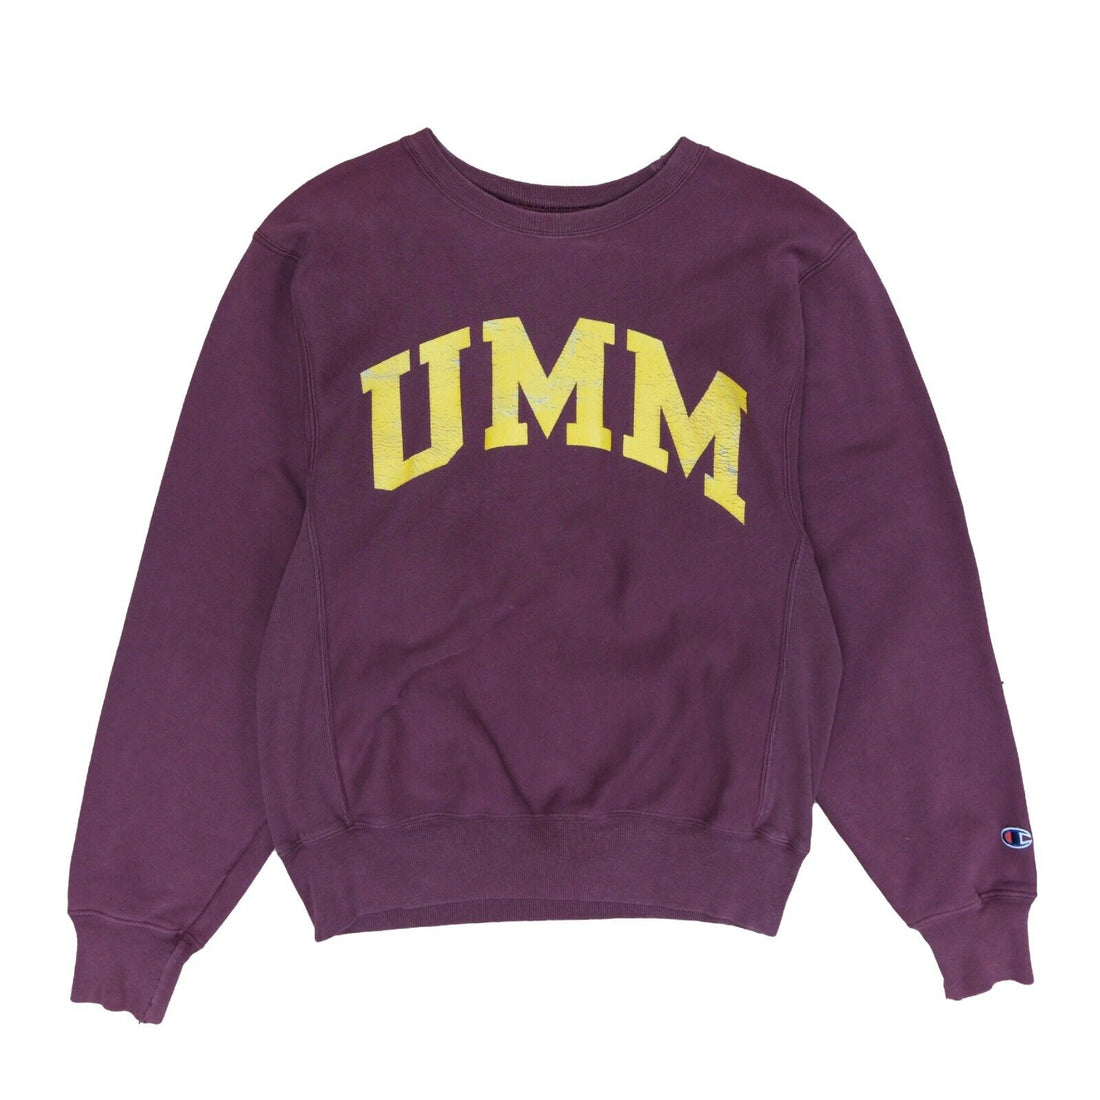 Vintage University of Maine Champion Reverse Weave Sweatshirt Size Small 90s